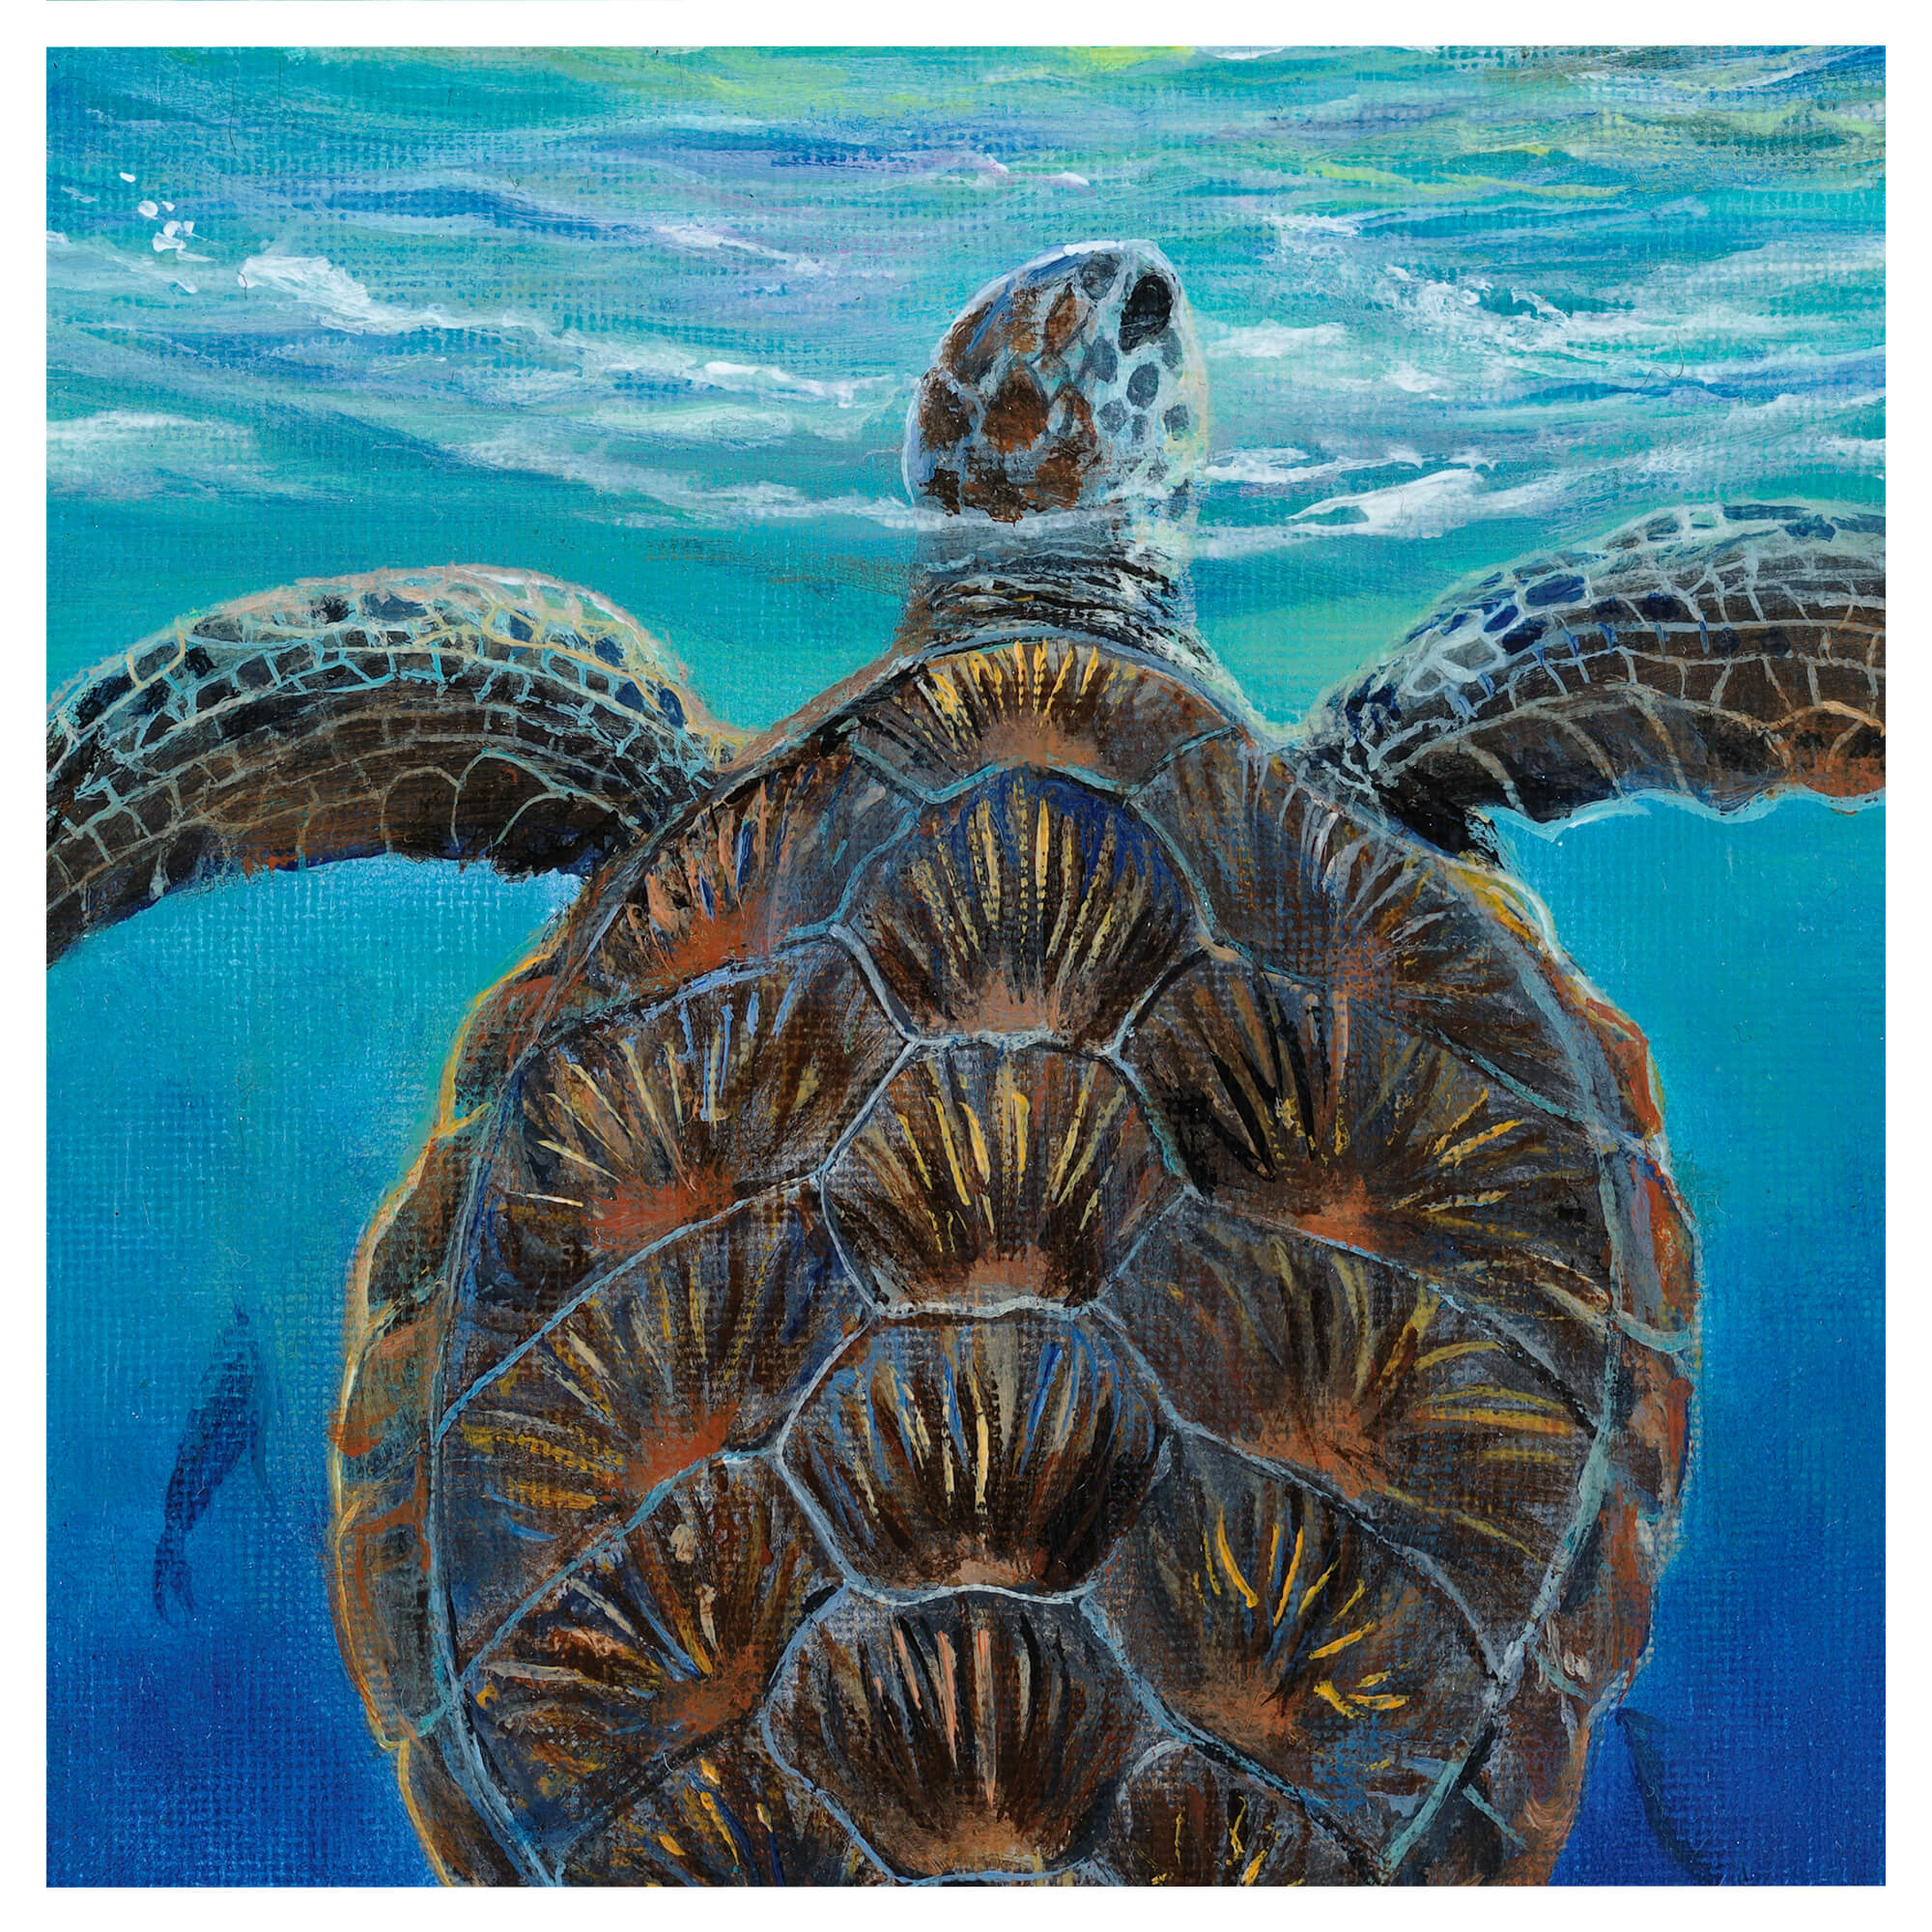 An illustratrion showcasing a turtle by hawaii artist Esperance Rakotonirina